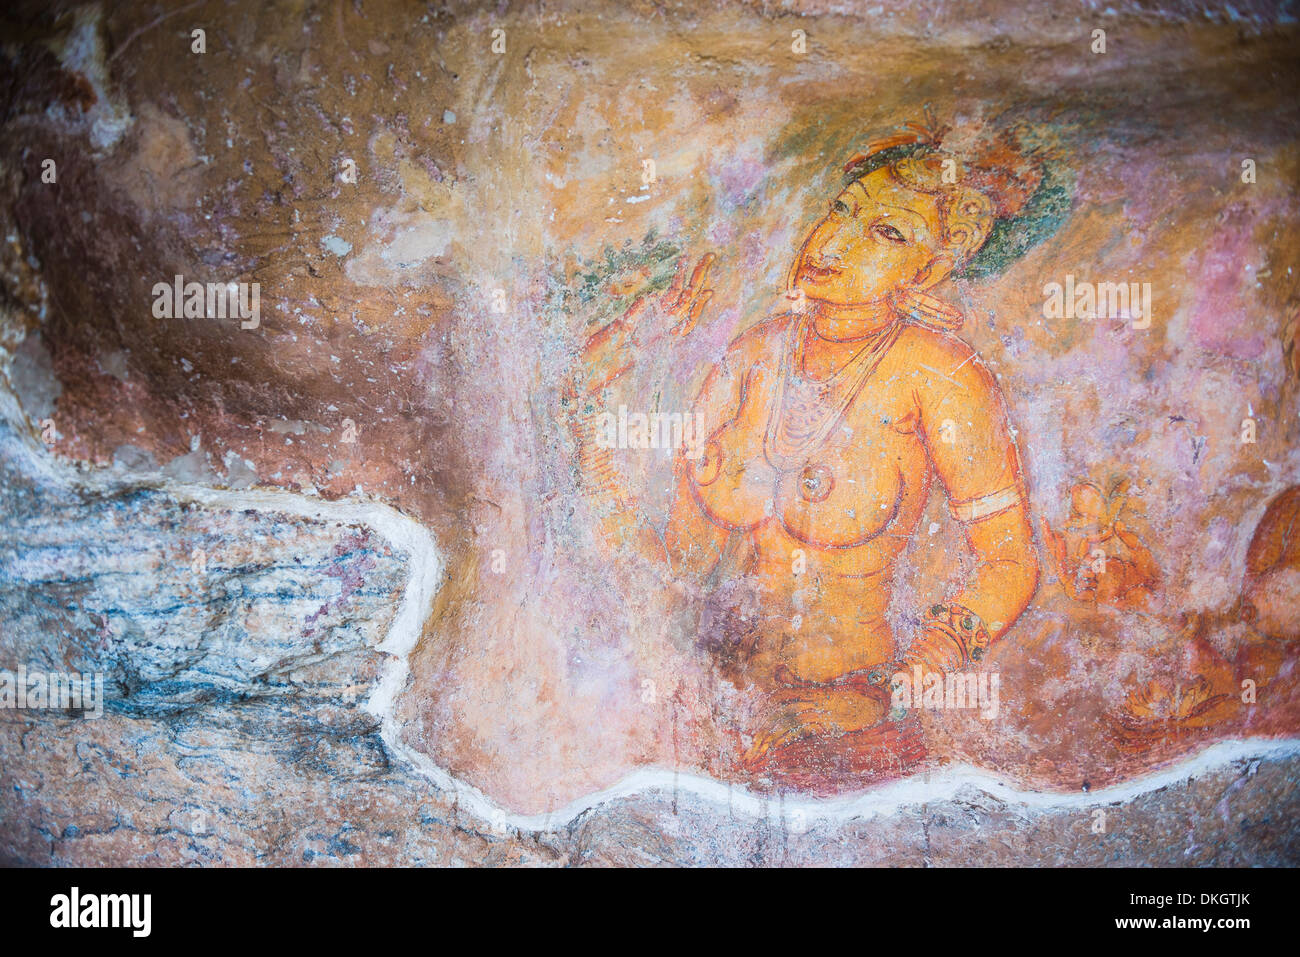 Apsara Frescoes on Mirror Wall at Sigiriya Rock Fortress, UNESCO World Heritage Site, Sri Lanka, Asia Stock Photo